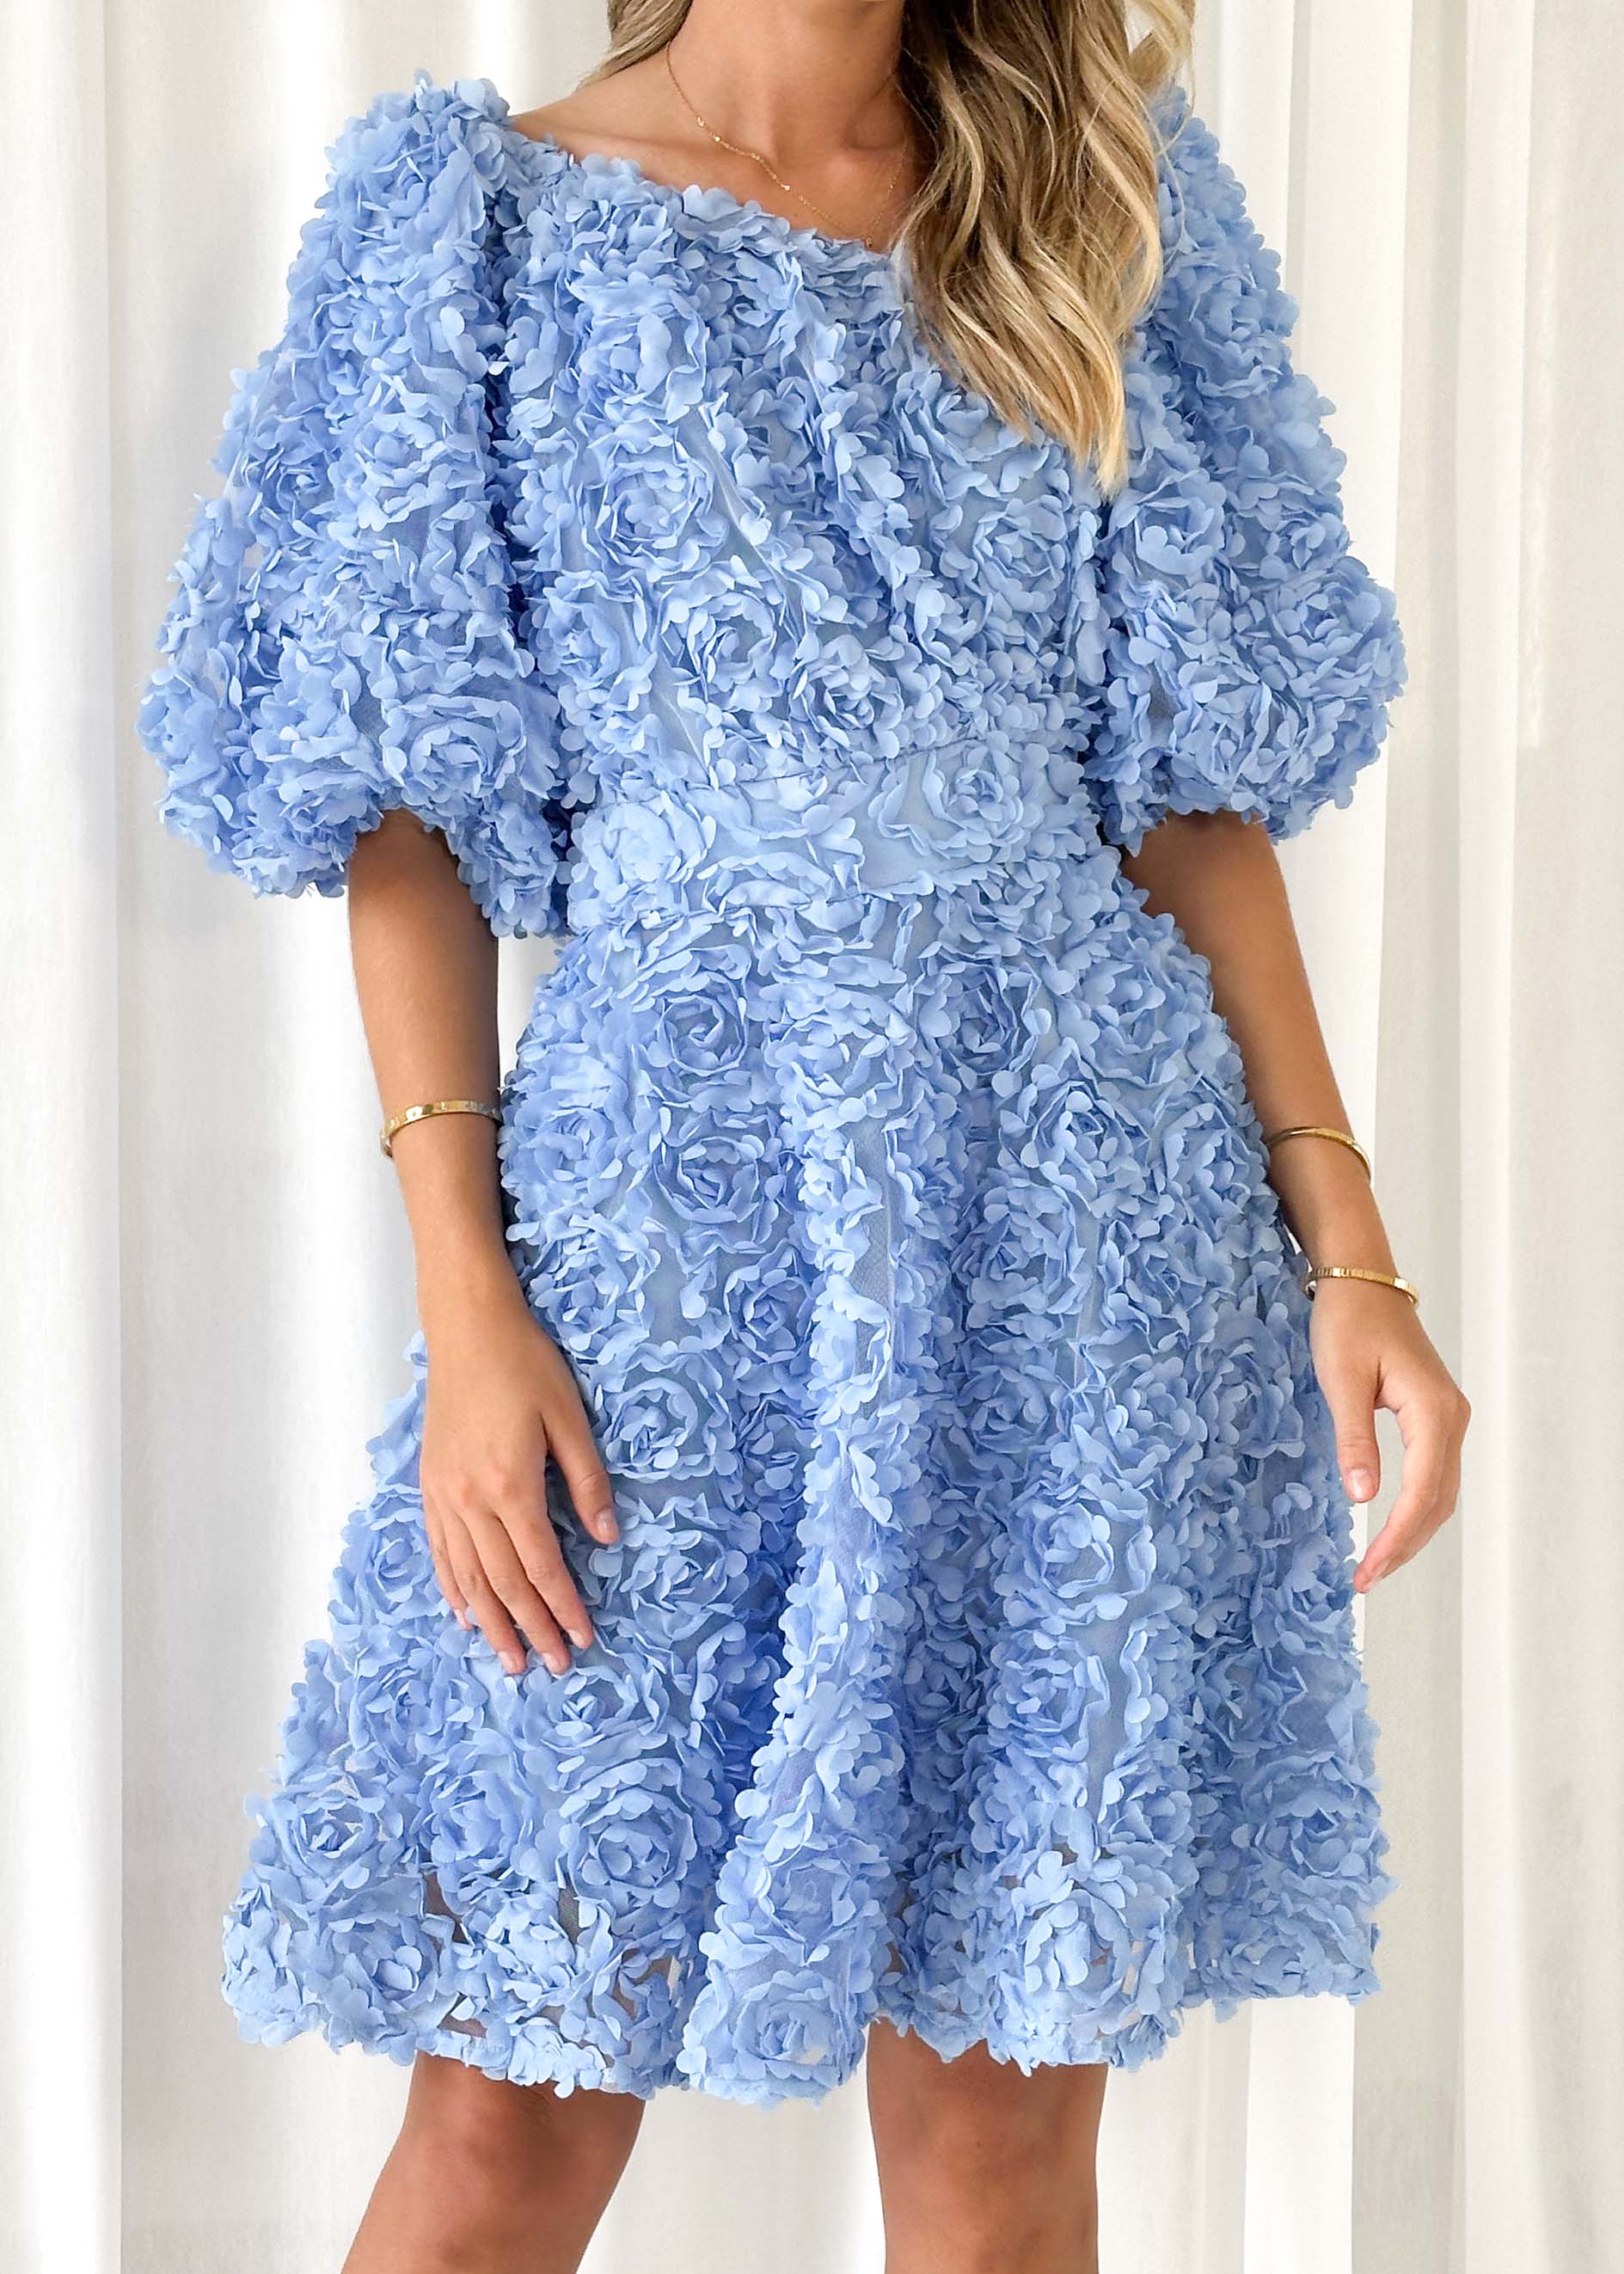 Elorto Dress - Blue